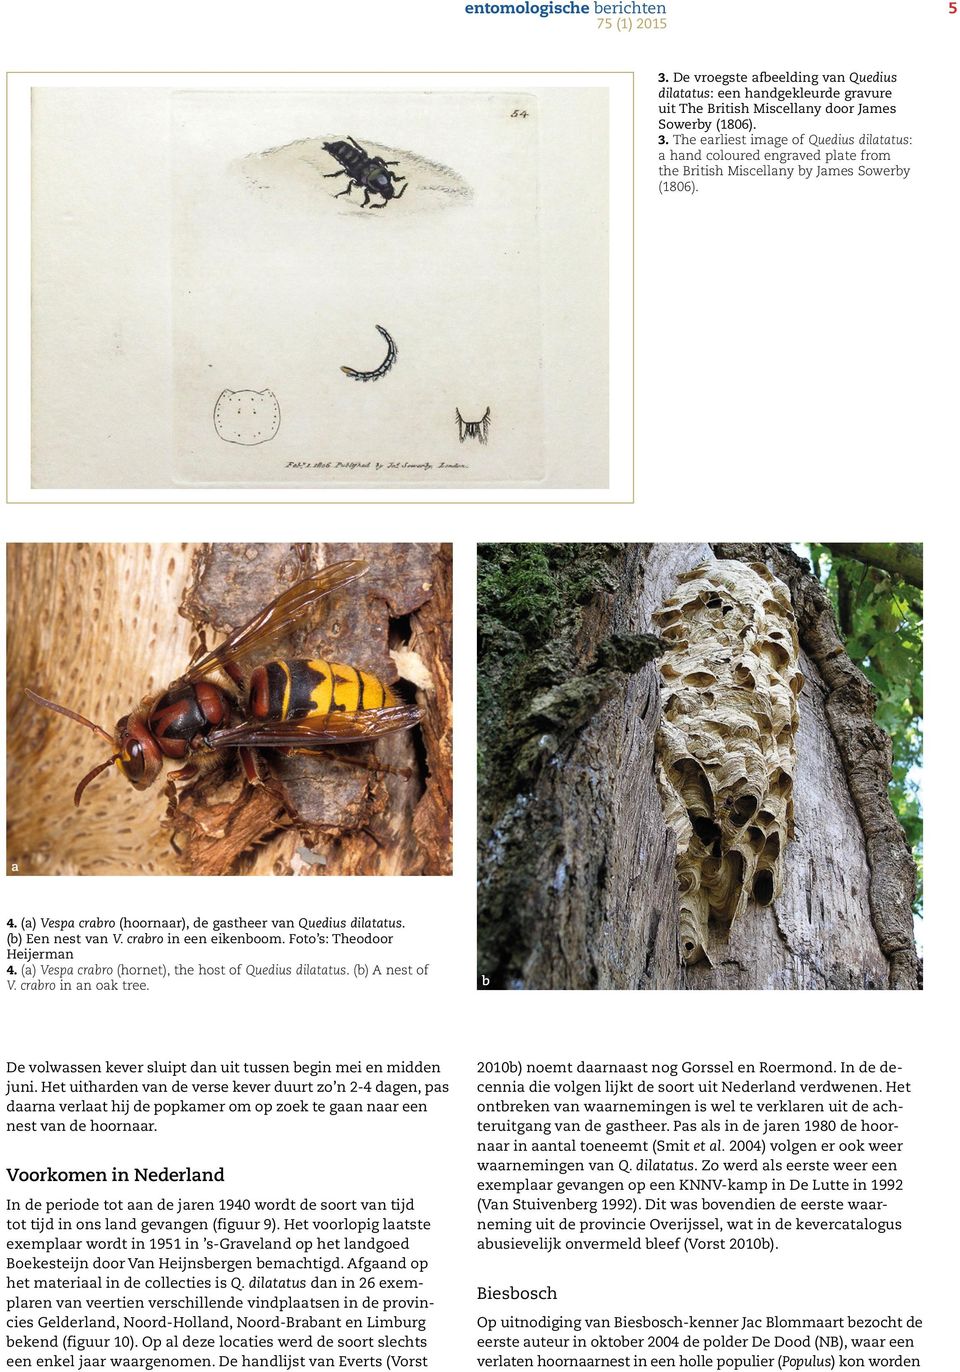 (a) Vespa crabro (hornet), the host of Quedius dilatatus. (b) A nest of V. crabro in an oak tree. b De volwassen kever sluipt dan uit tussen begin mei en midden juni.